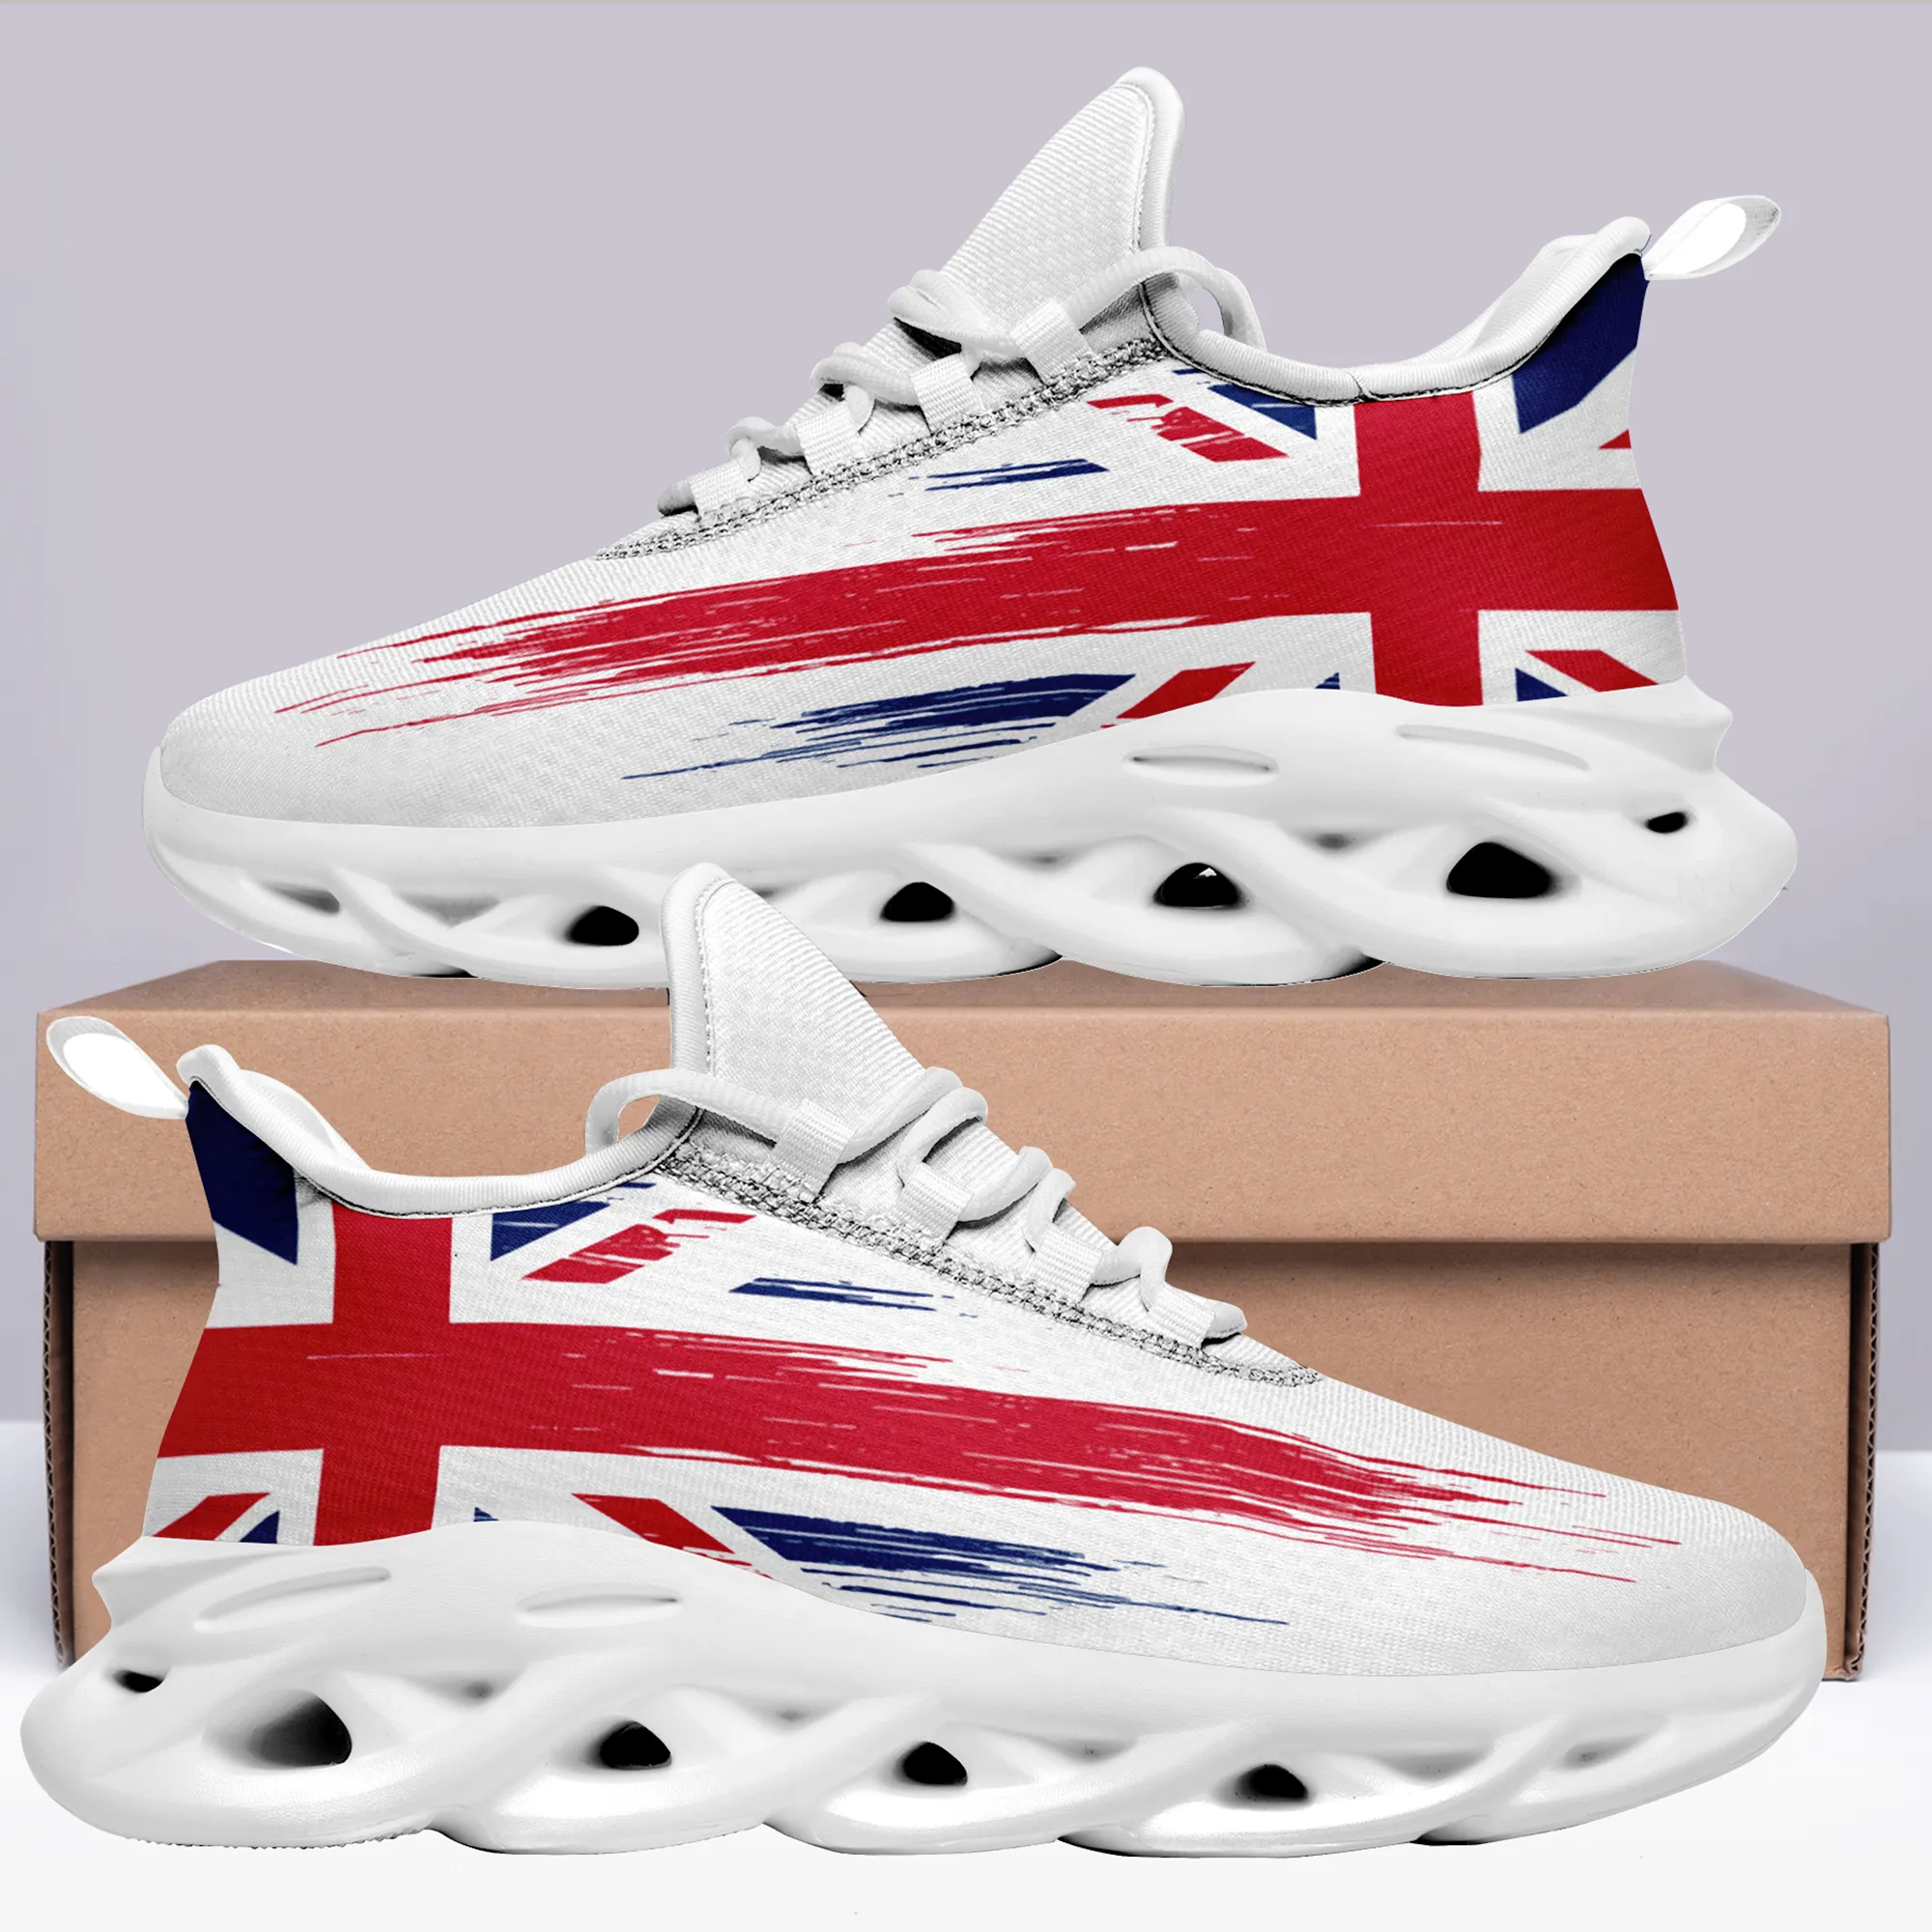 coolcustomize إنجلترا الوطنية في المملكة المتحدة العلم الذي يركض تنس المشي أحذية هدية لصديق مخصصة خفيفة الوزن مريح الدانتيل في مجال الأحذية الرياضية للجنسين